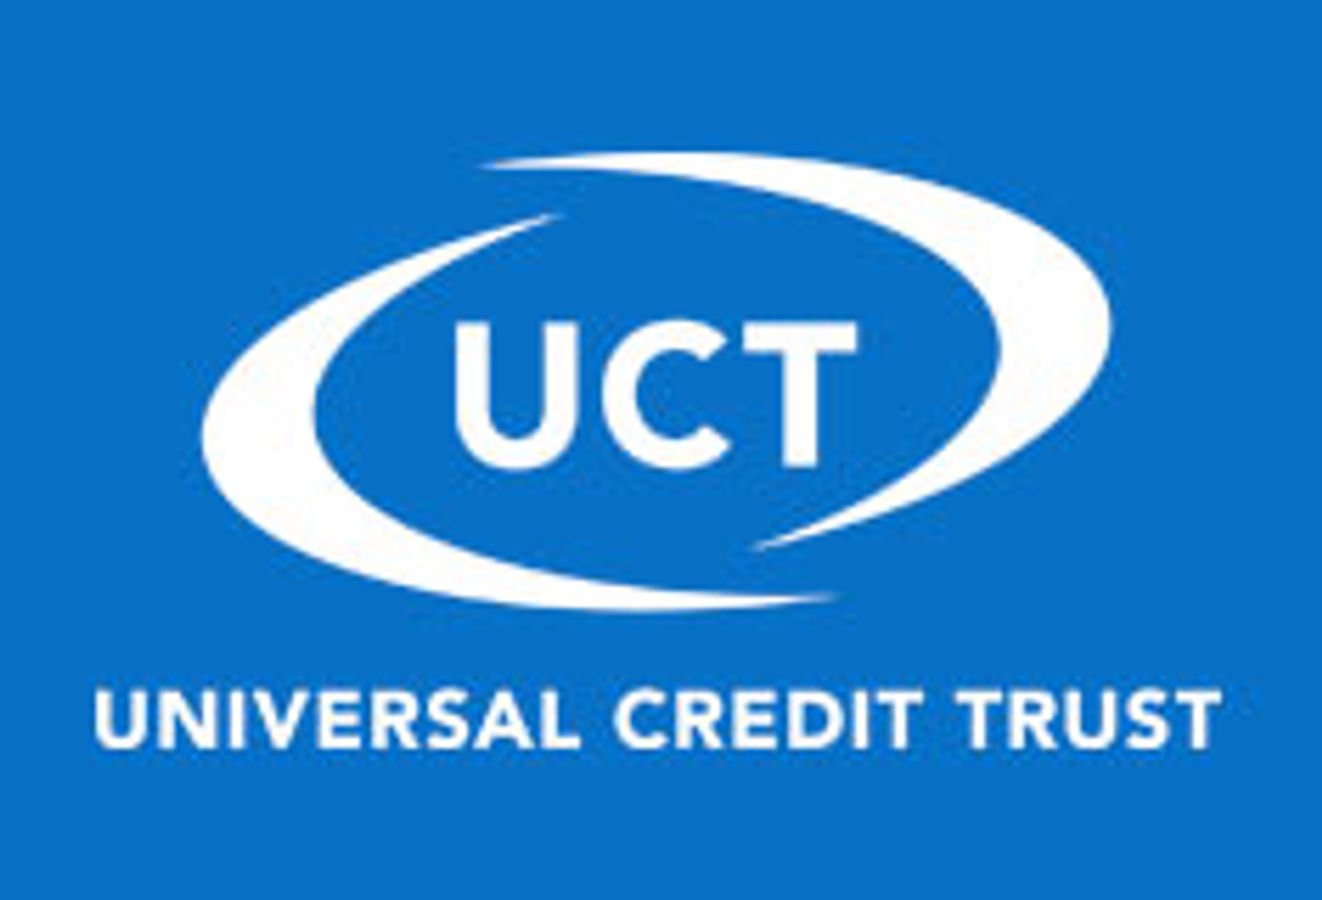 Universal Credit Trust